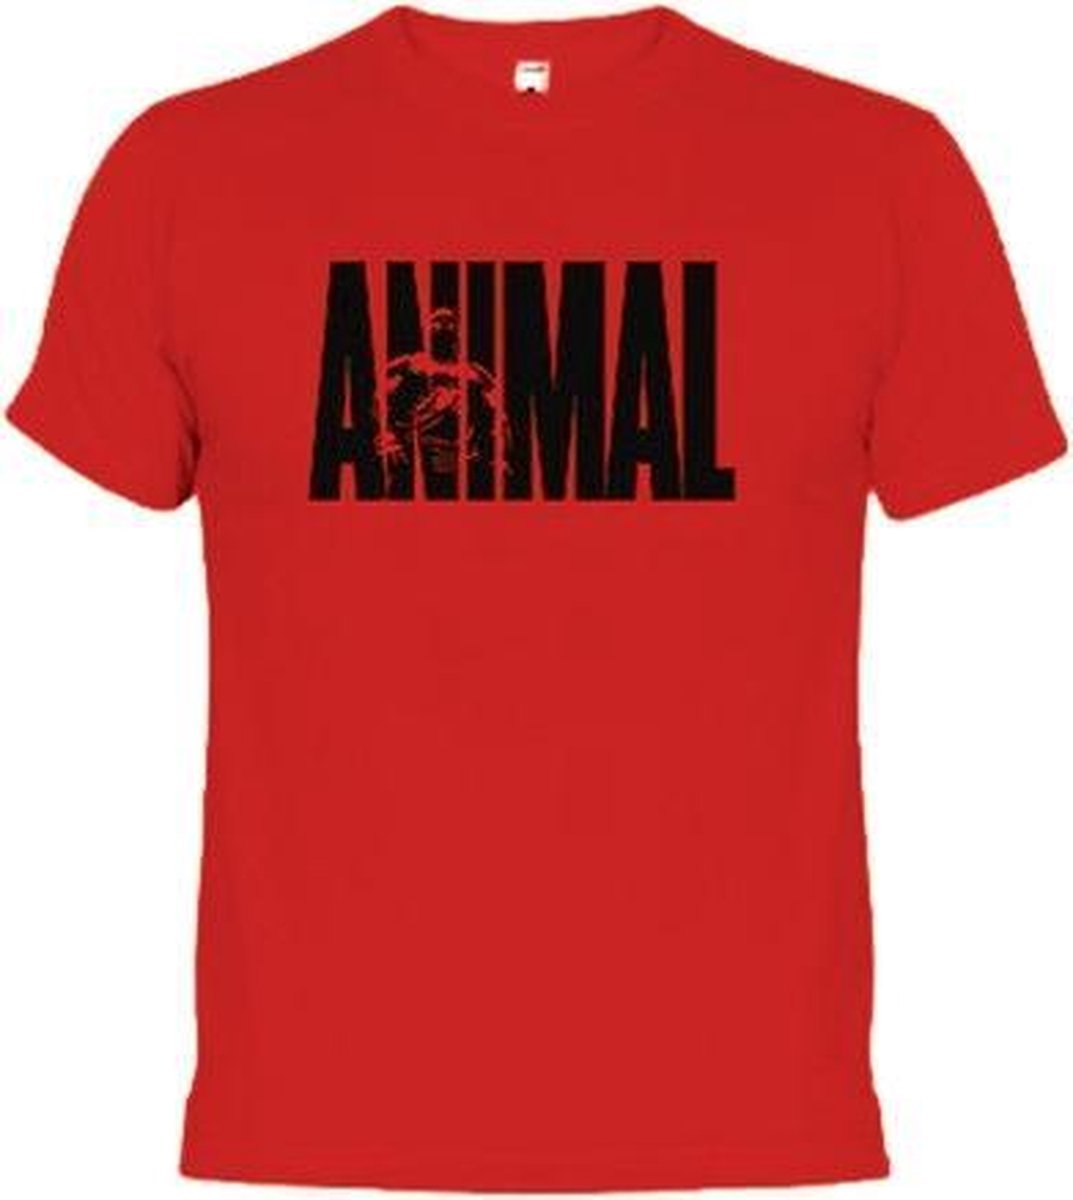 Animal Iconic Shirt Maat M Iconic Red